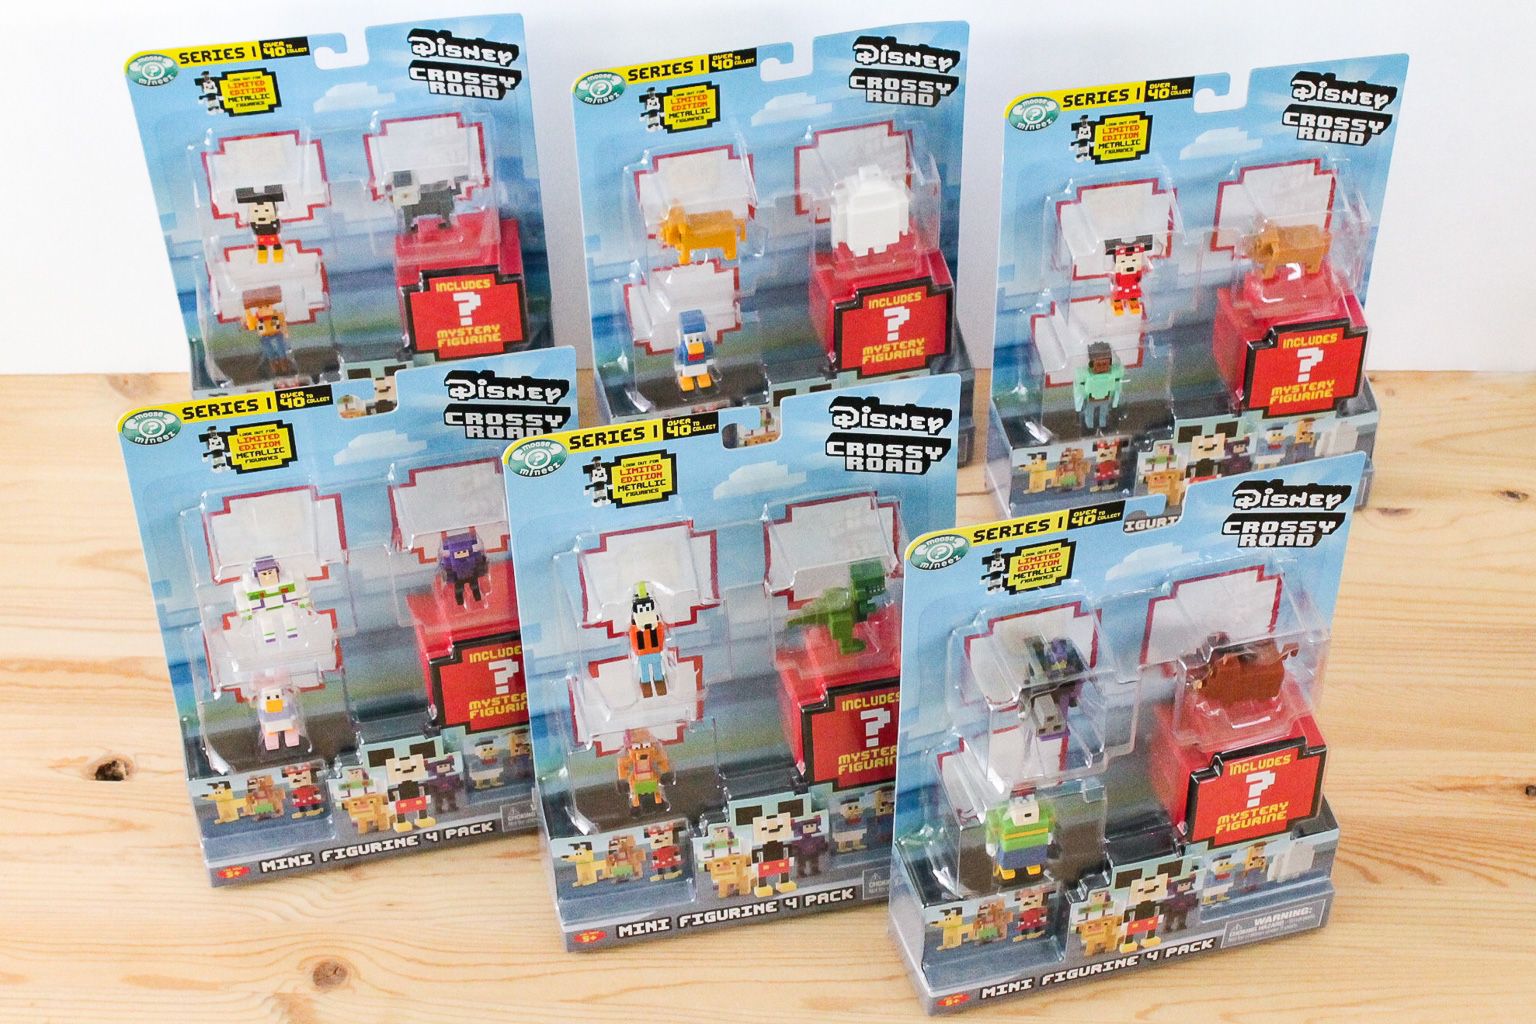 6 SETS of 4PK Disney Crossy Road Series 1 Mini Figures- 24 Total Figures